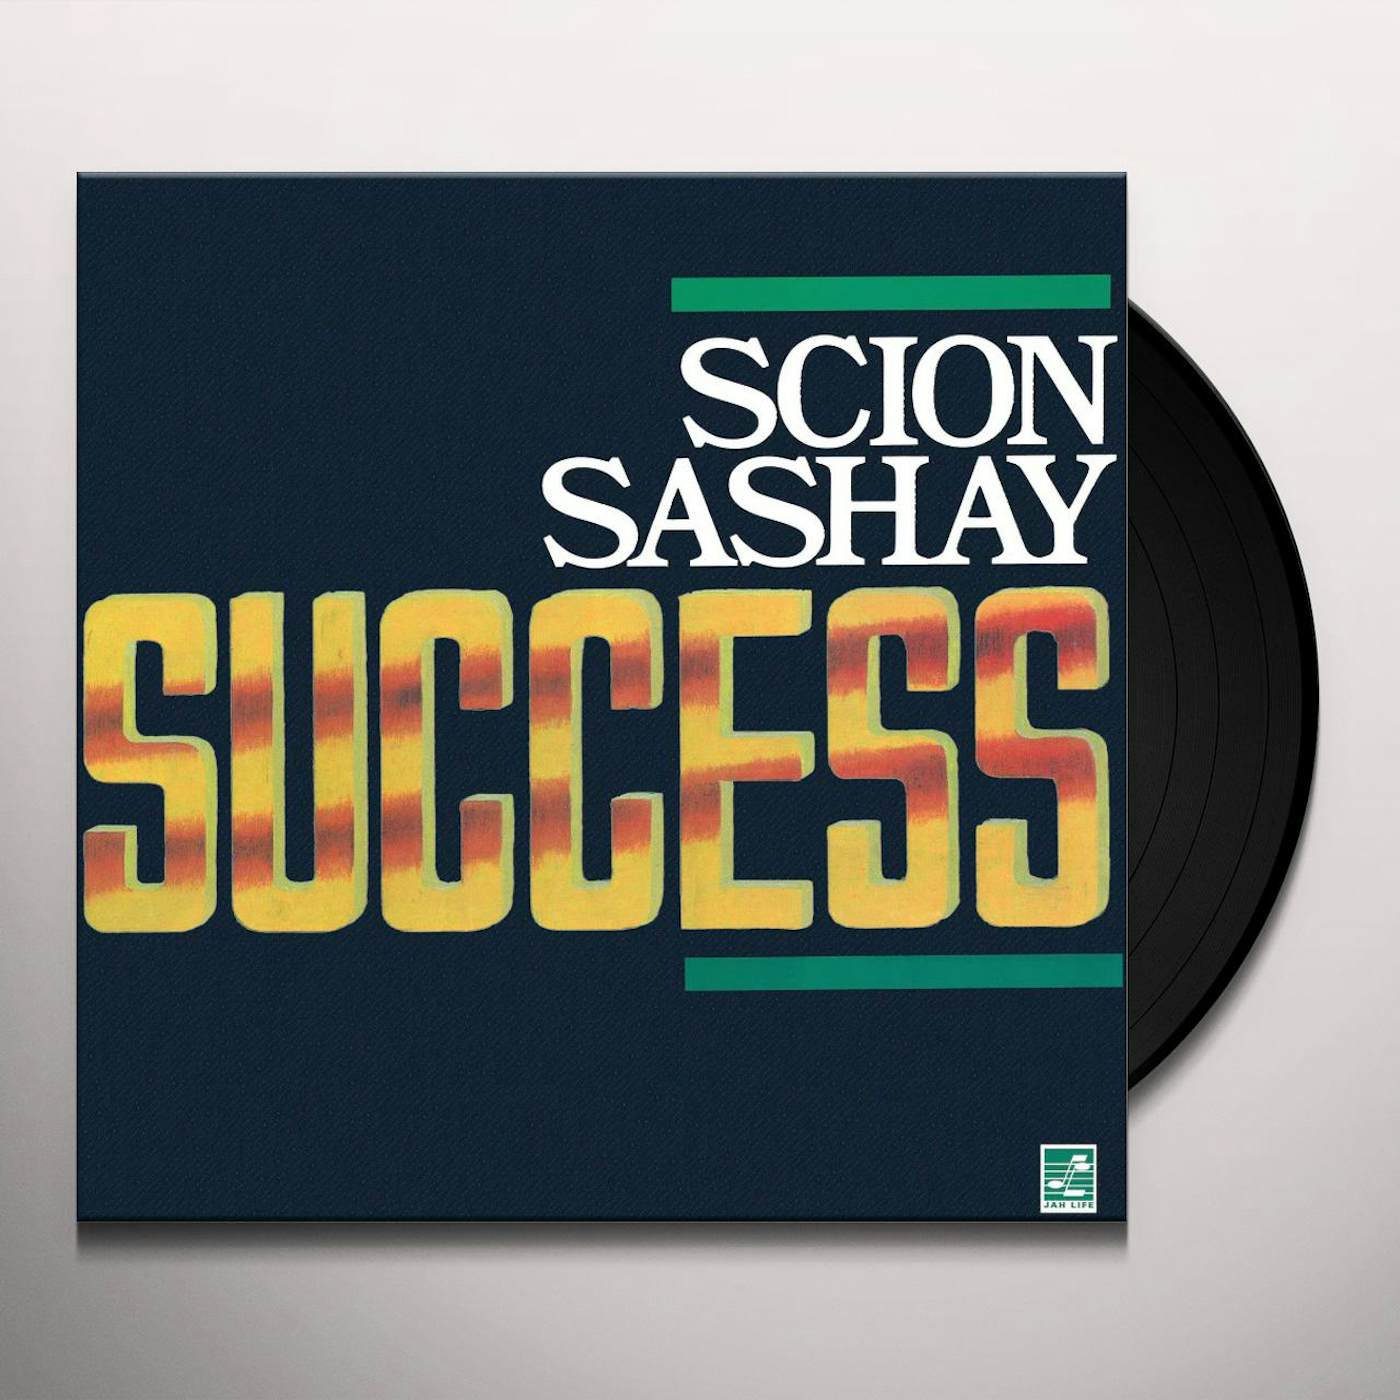 Scion Sashay